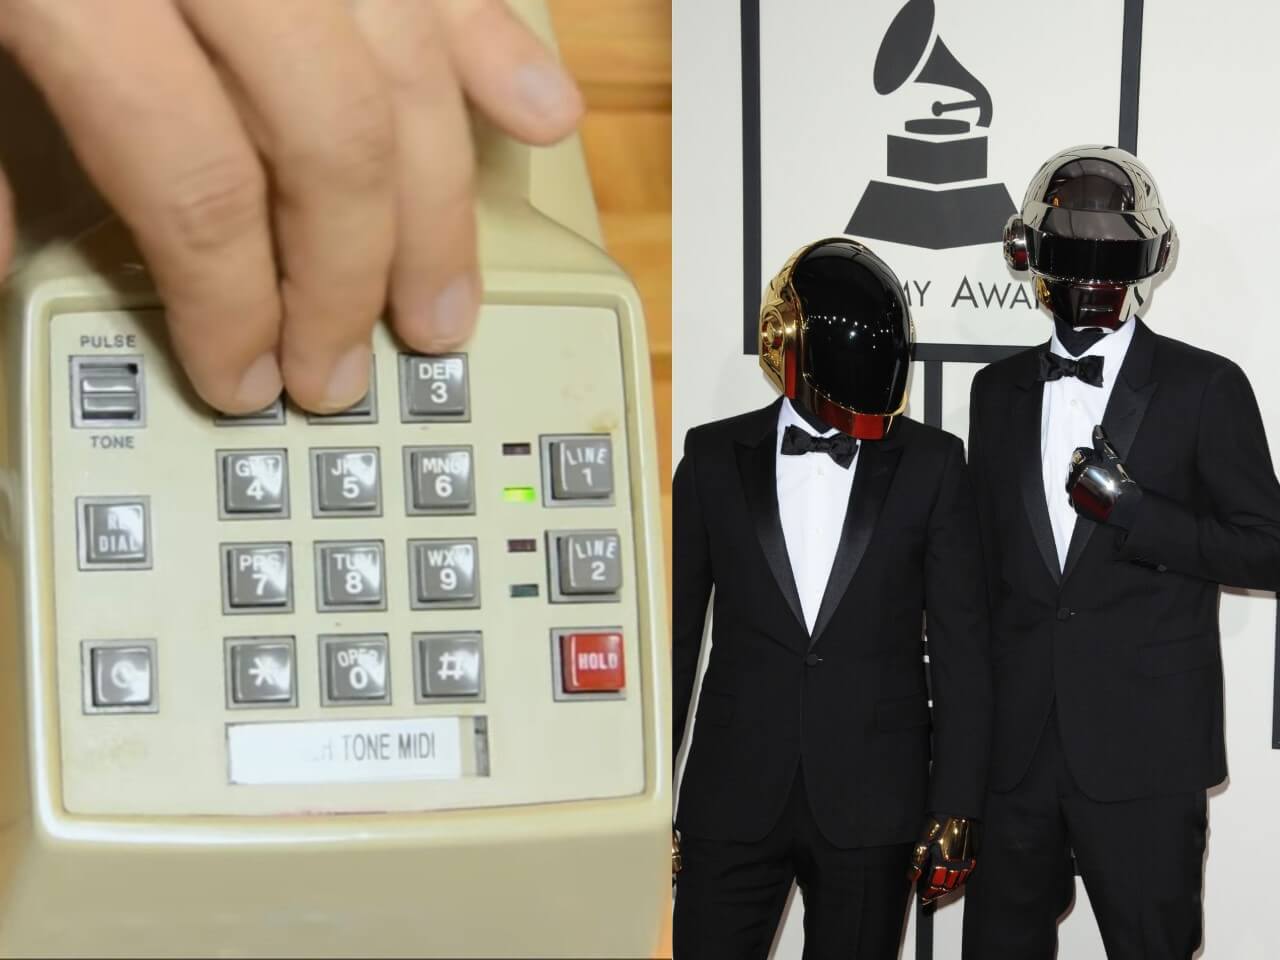 Daft Punk MIDI Controller